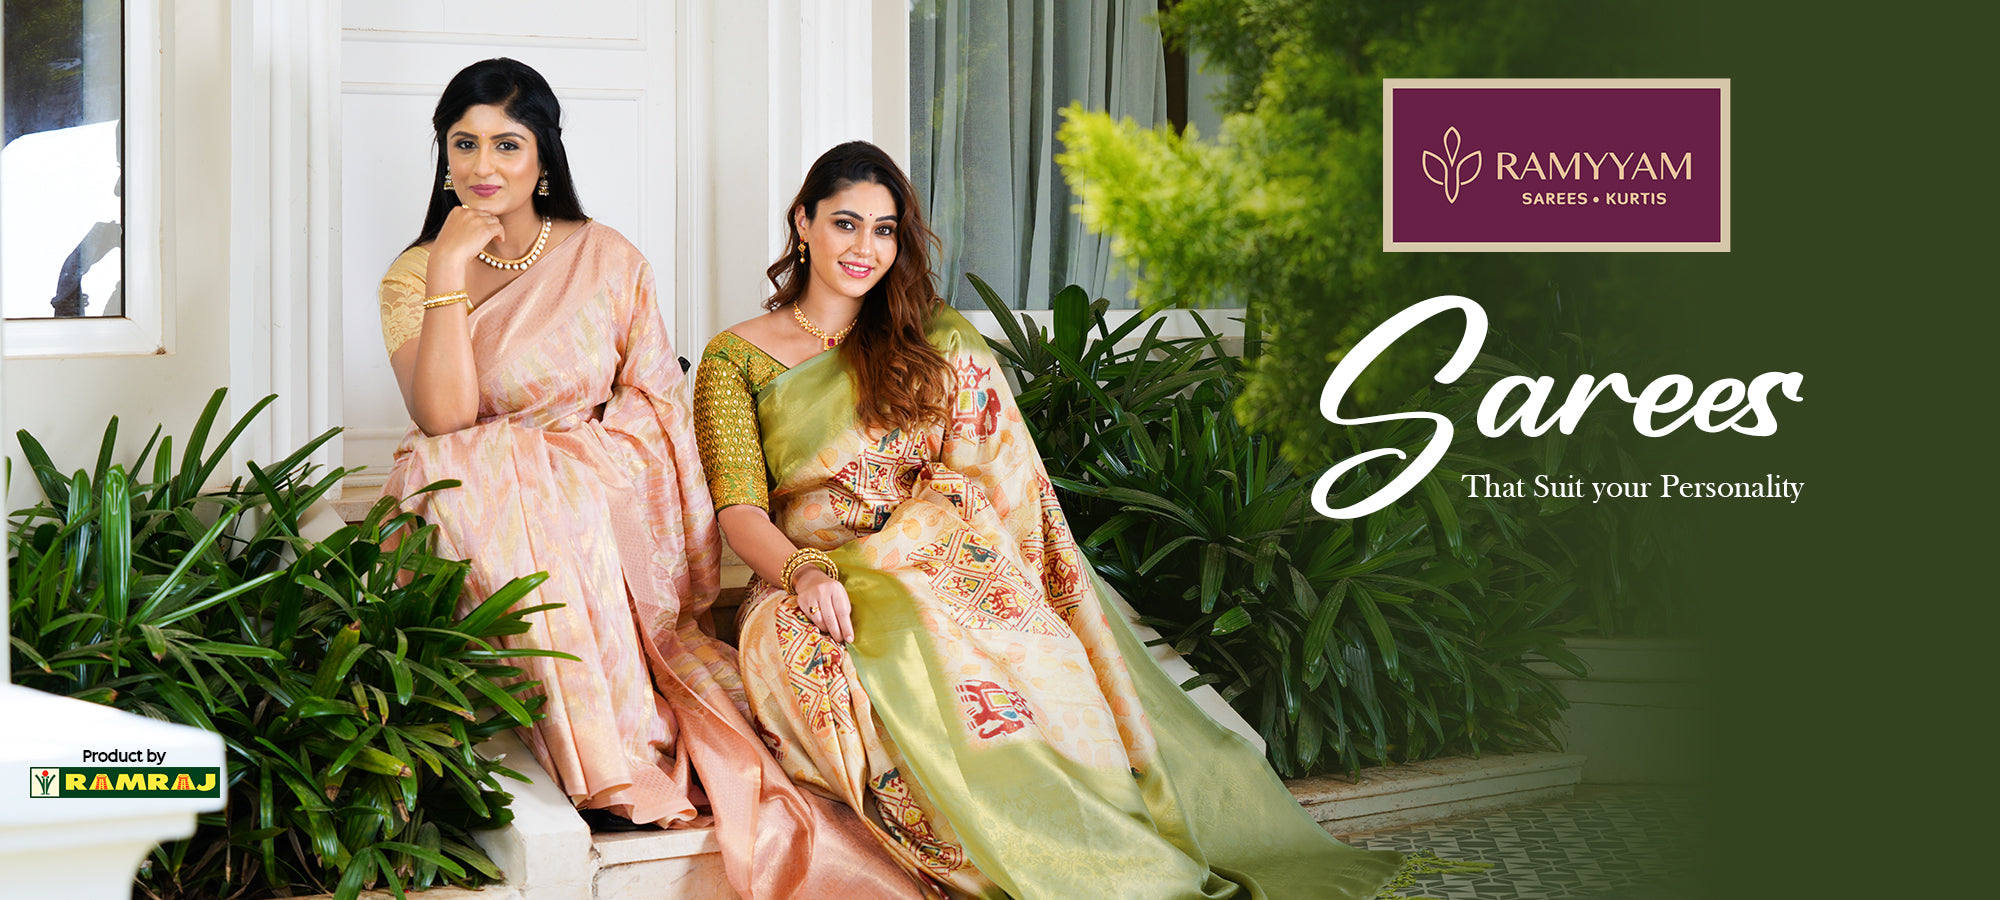 Beenika Women's Slub Cotton Unstitched Salwar-Suit Material With Dupatta ( Green, 2-2.5mtrs) at Rs 1326.00 | Gandhinagar| ID: 2851391710462